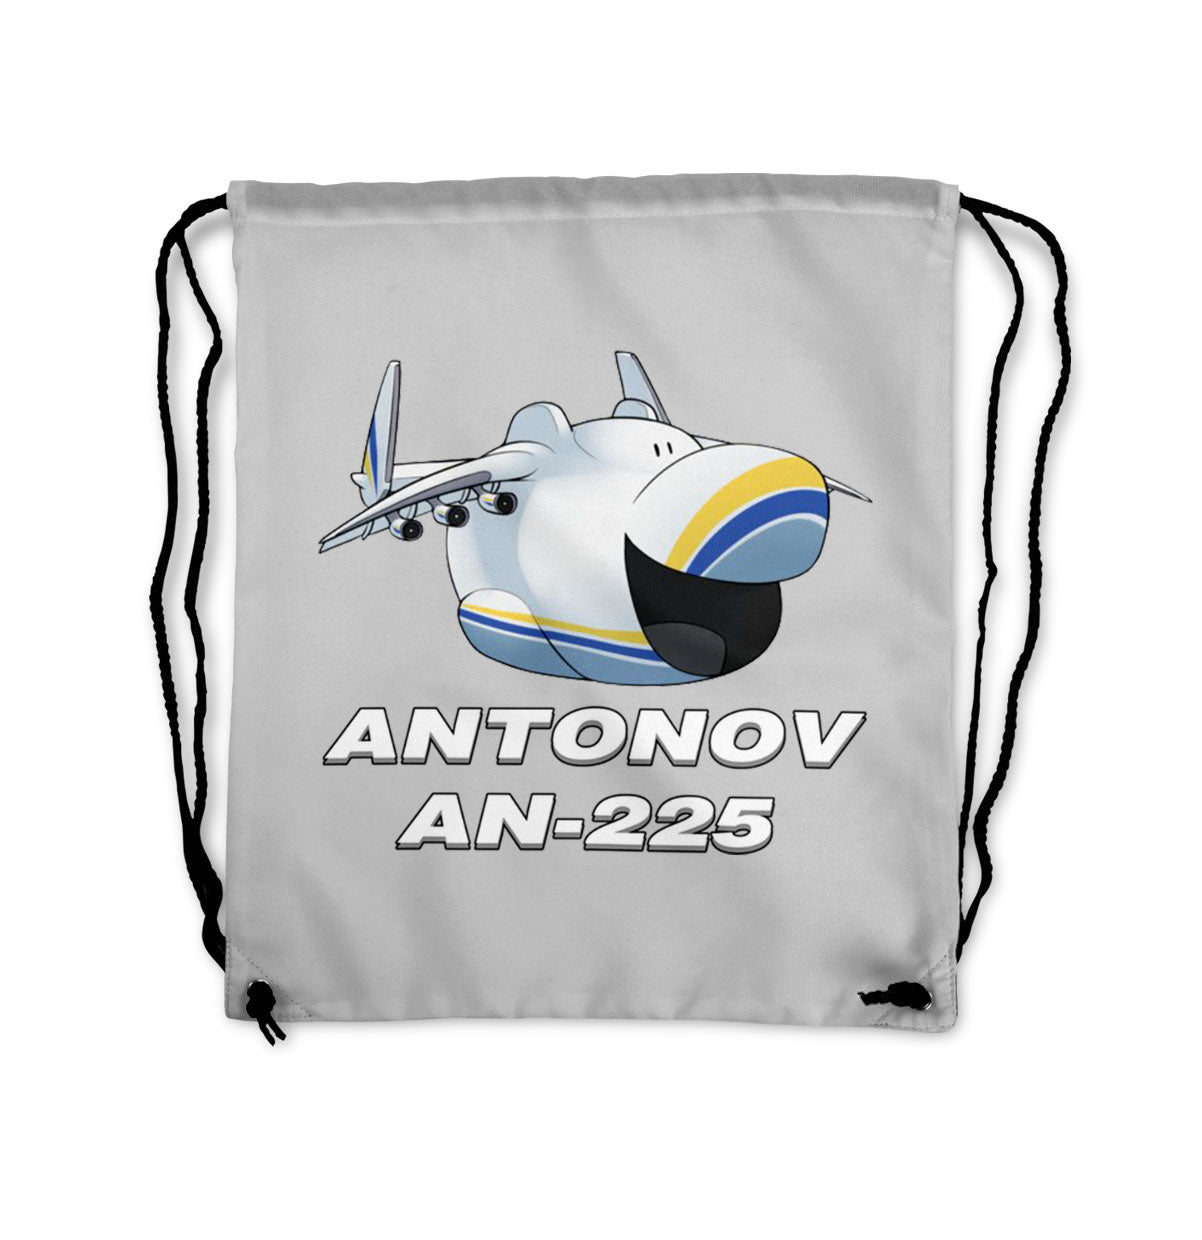 Antonov AN-225 (23) Designed Drawstring Bags